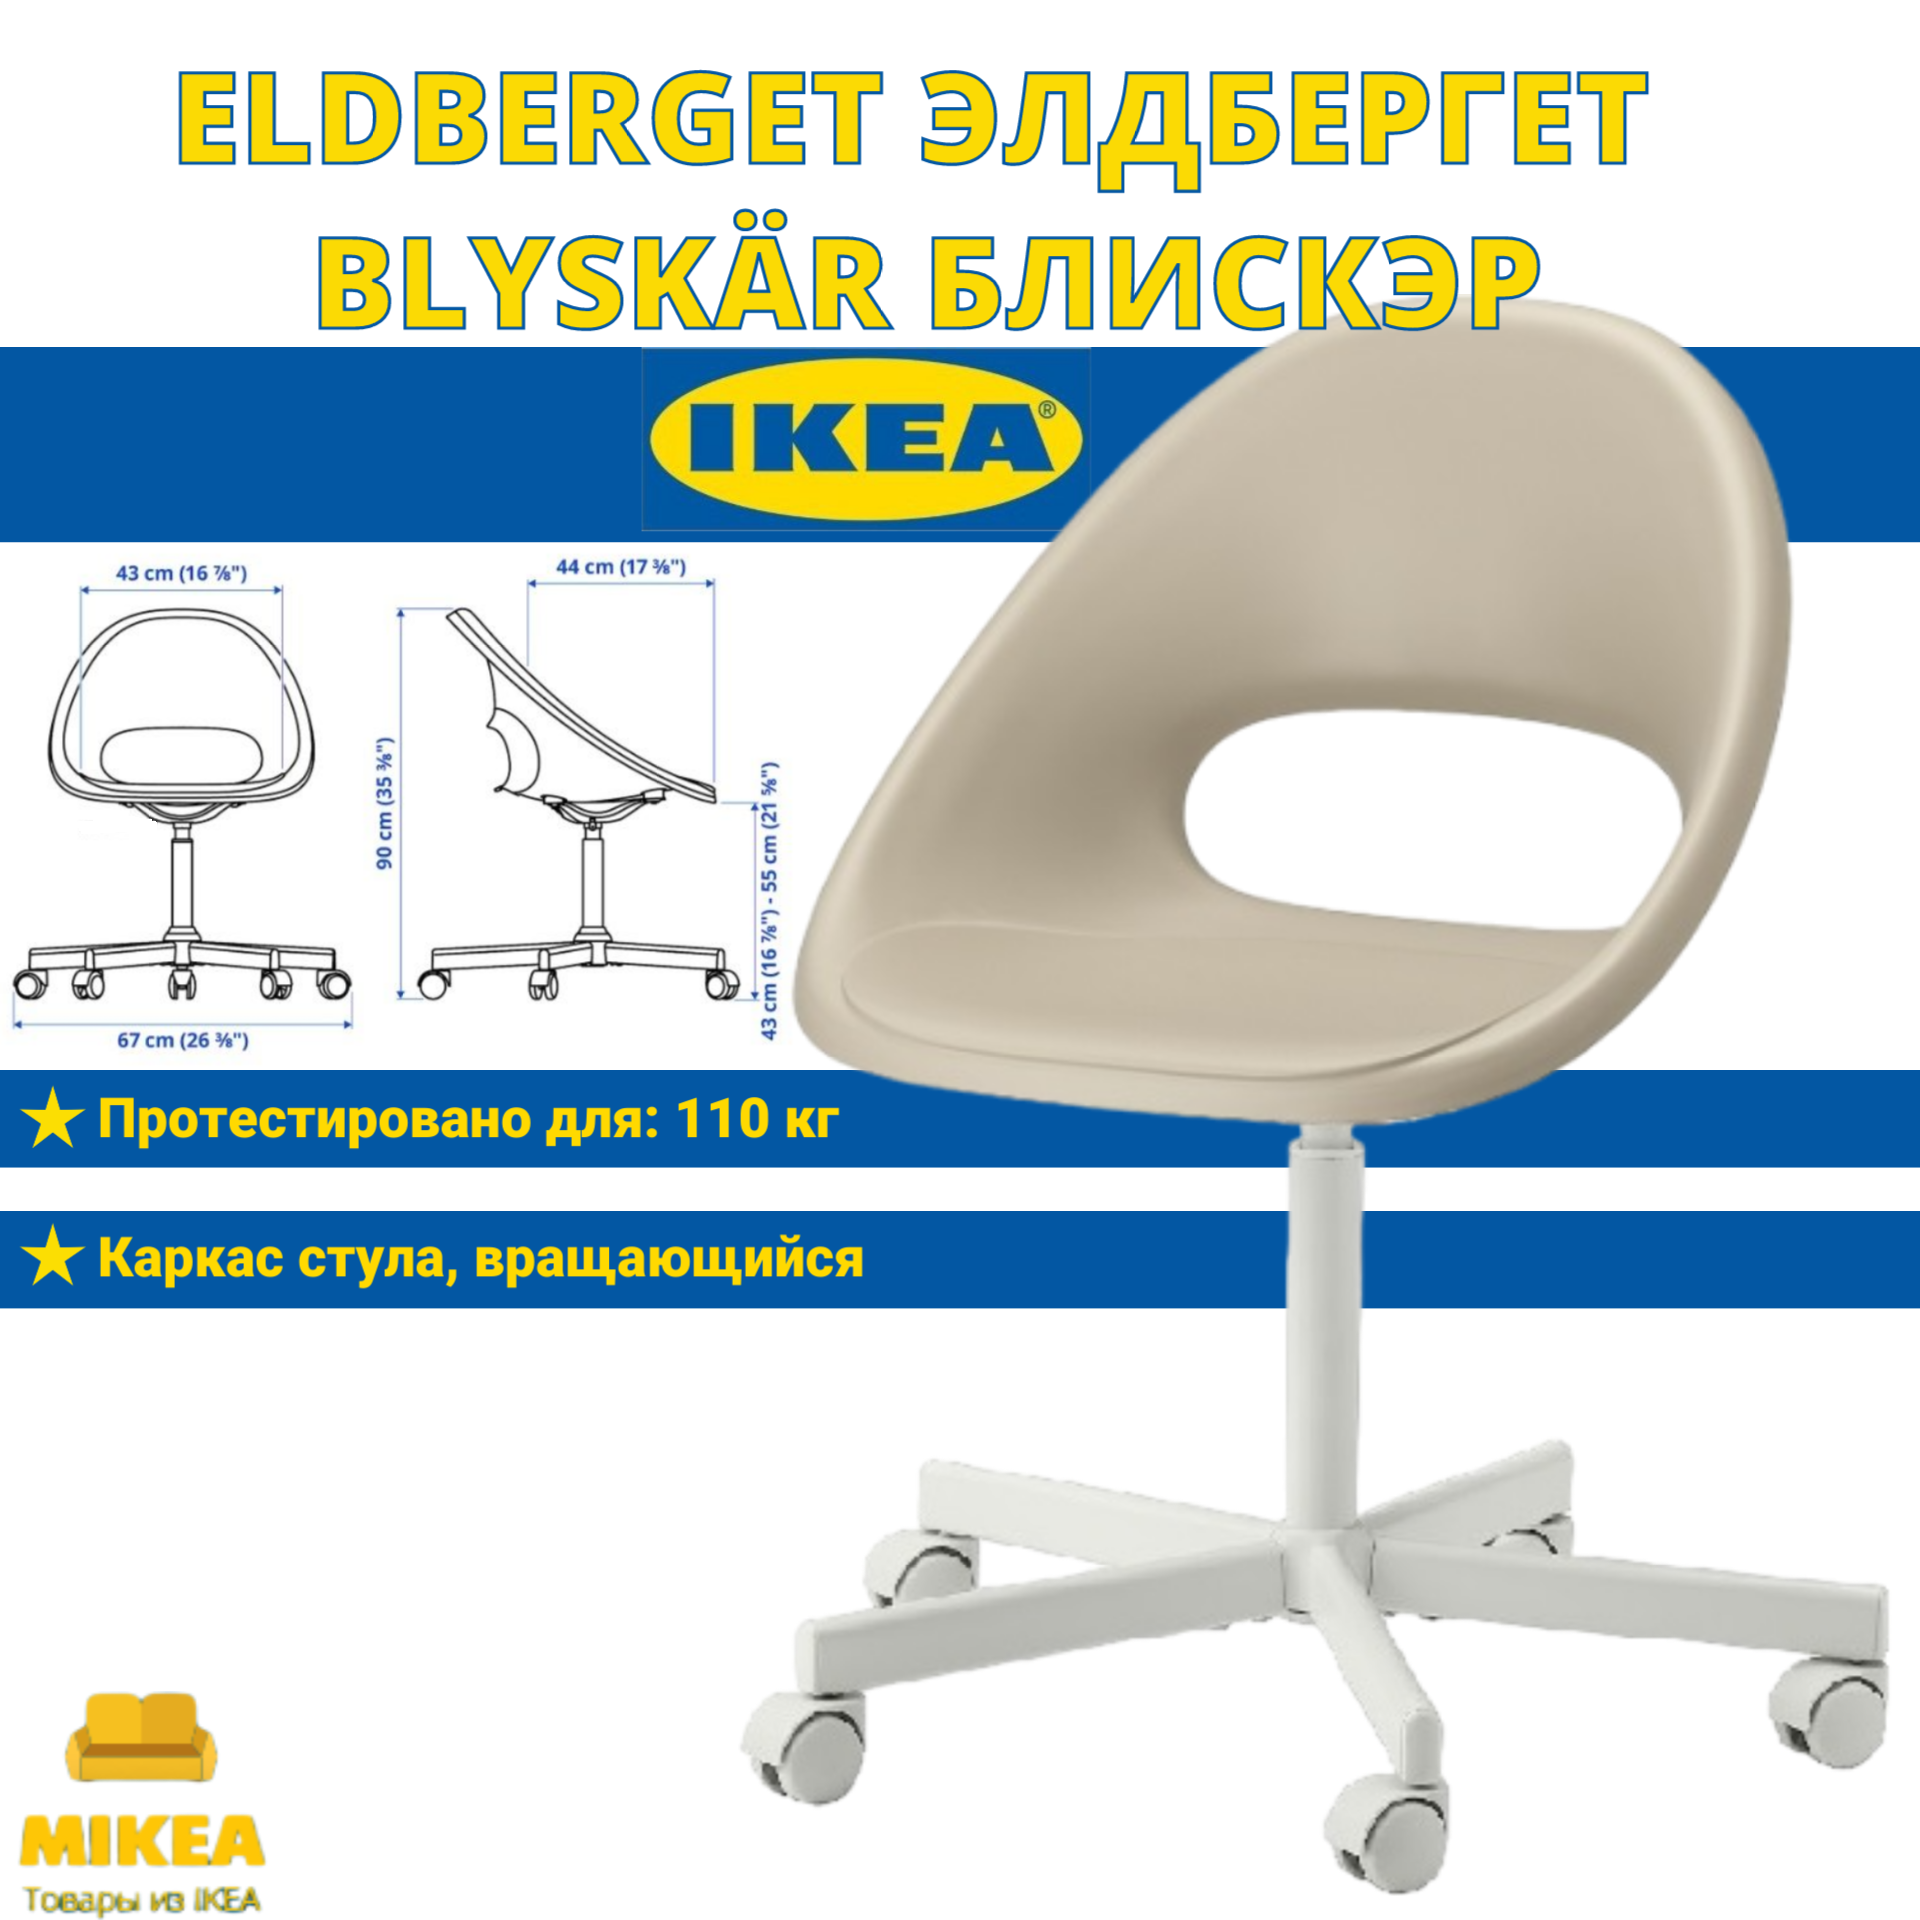 Рабочий стул, бежевый, IKEA ELDBERGET элдбергет / BLYSKR блискэр